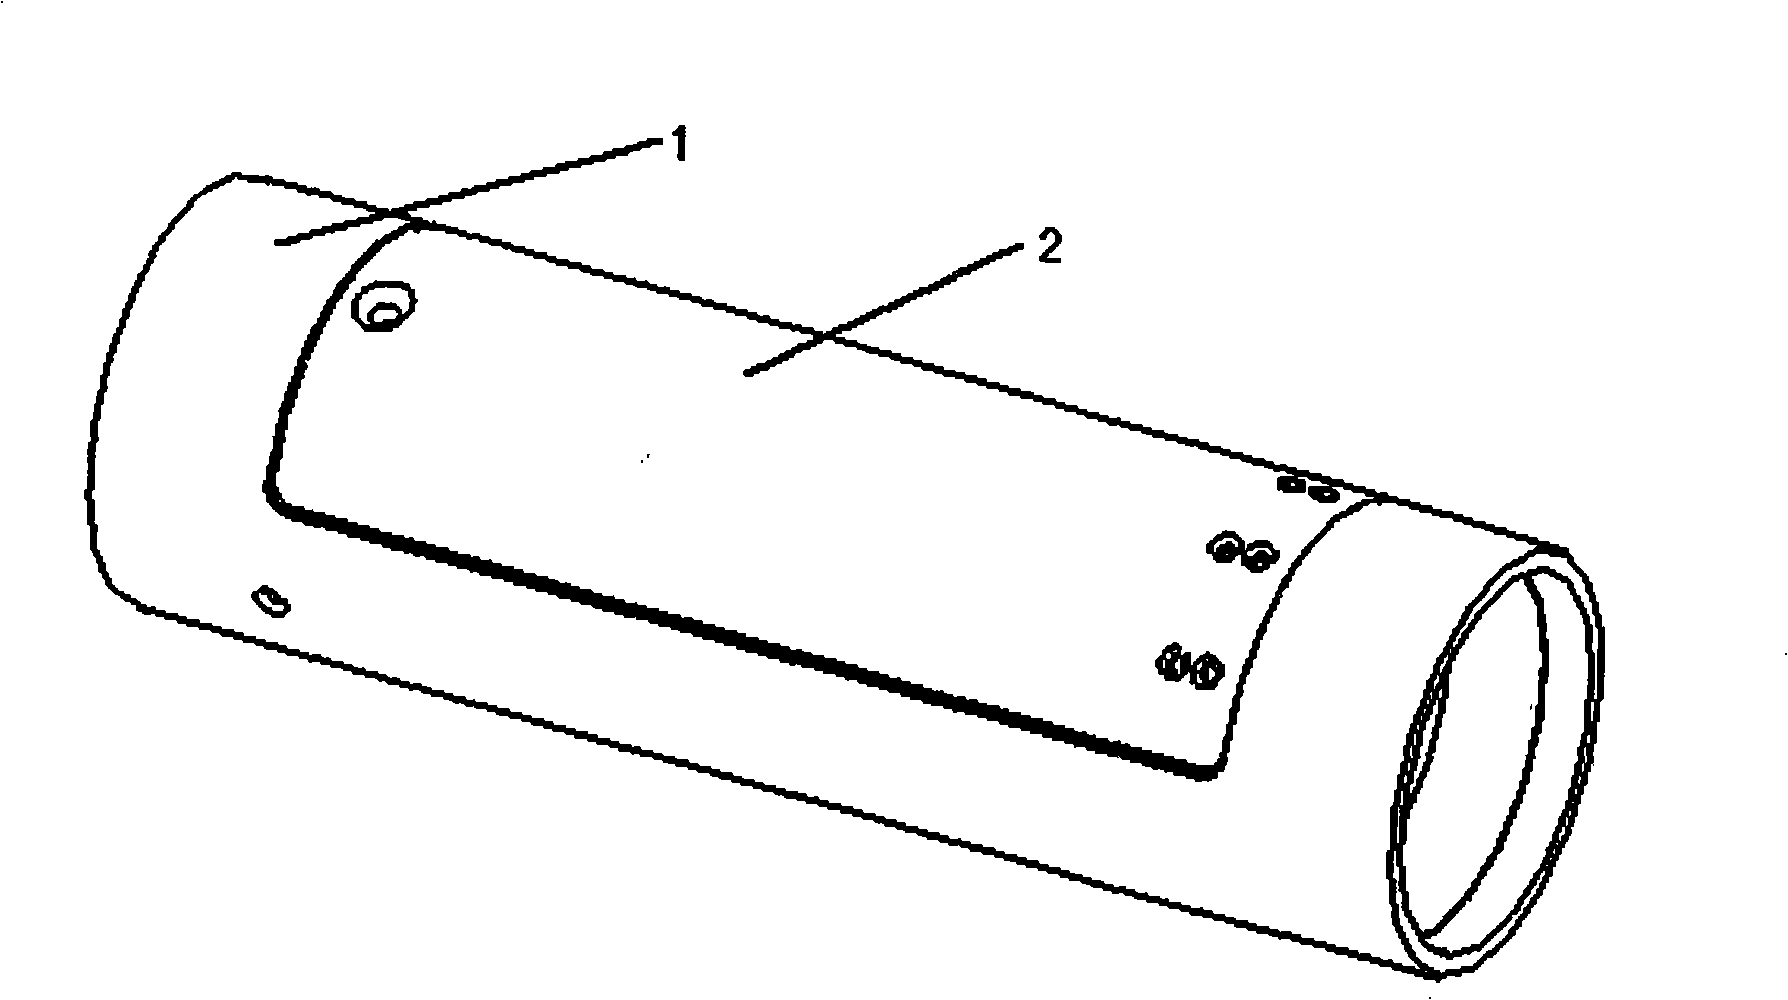 Parachute assembly suitable for rocket